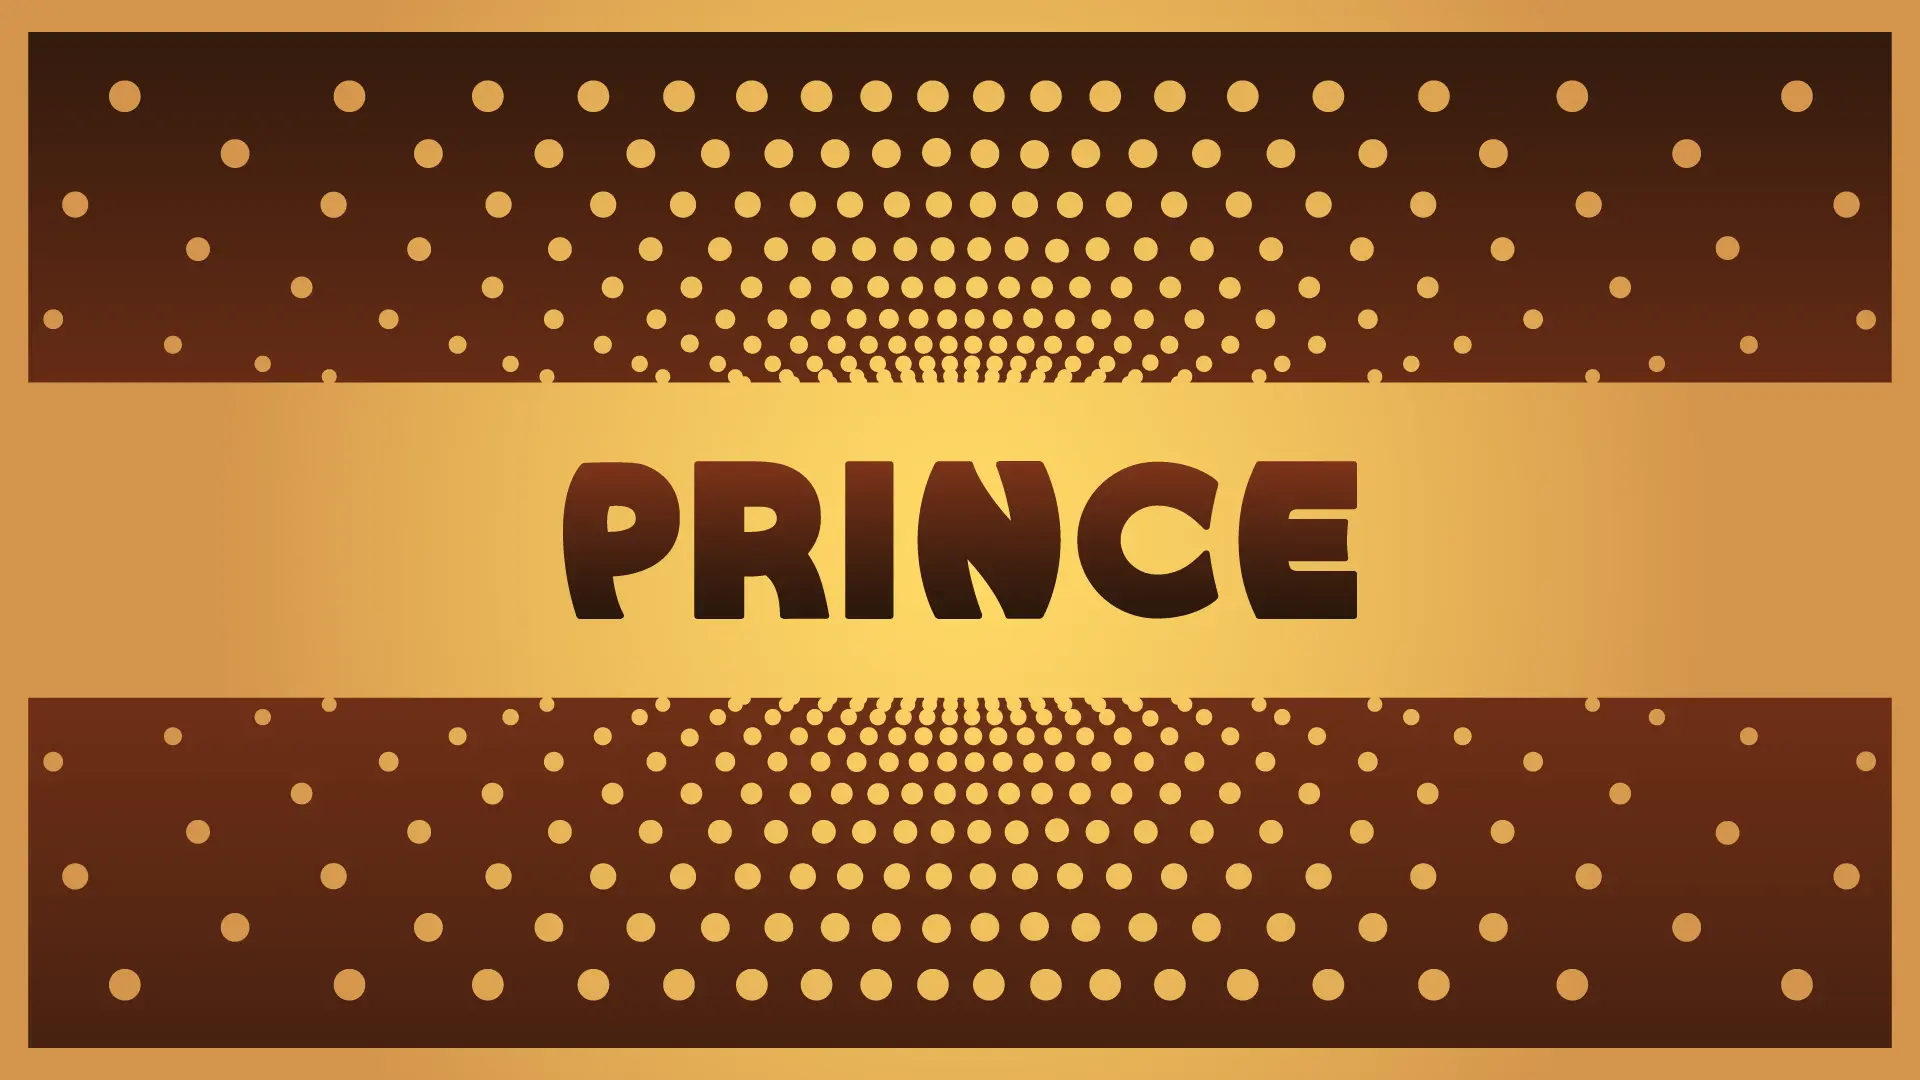 Prince_Plaque